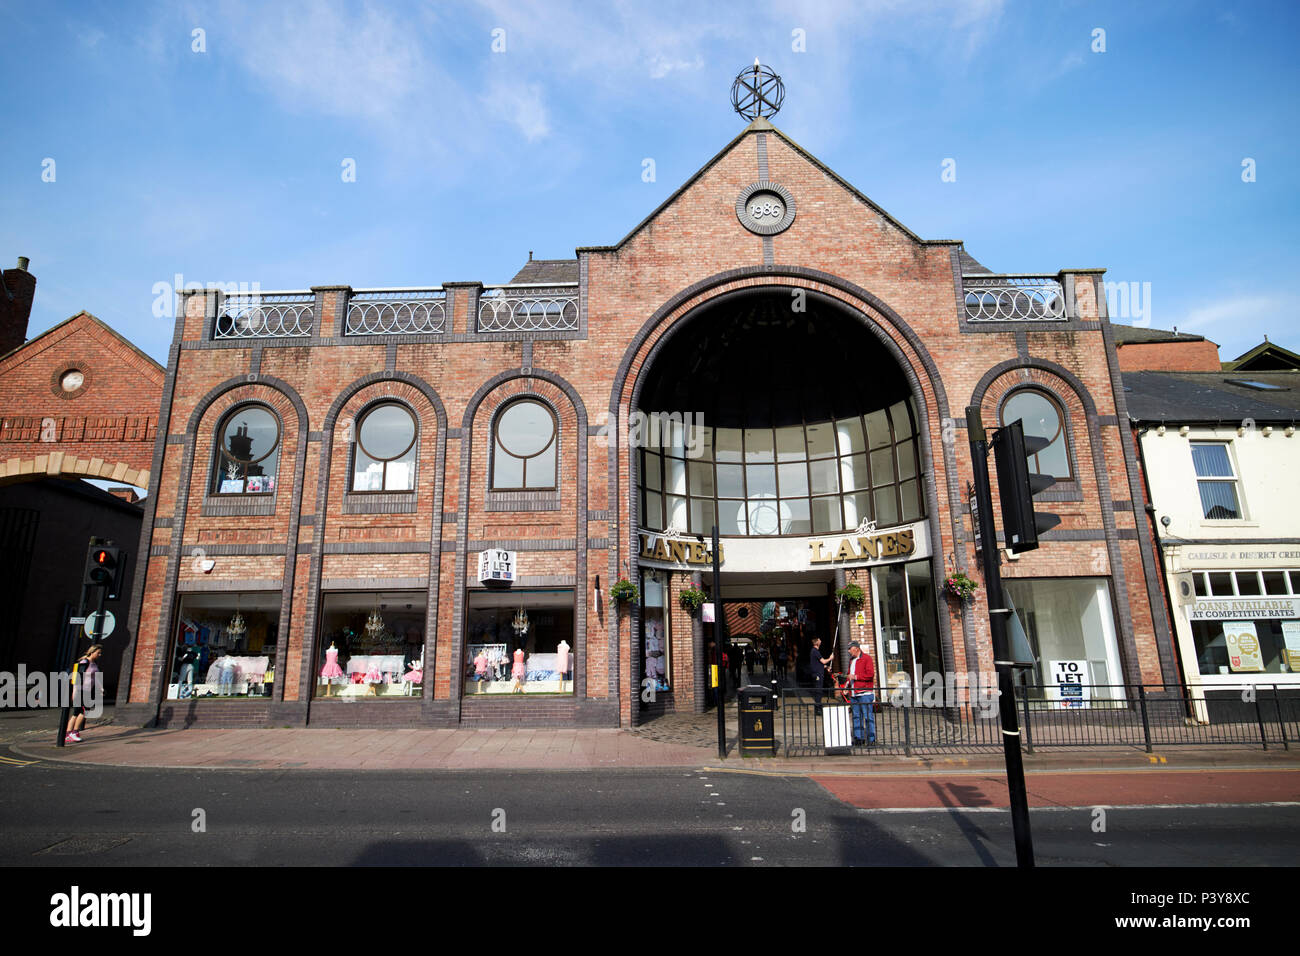 The lanes shopping centre in Carlisle Cumbria England UK Stock Photo